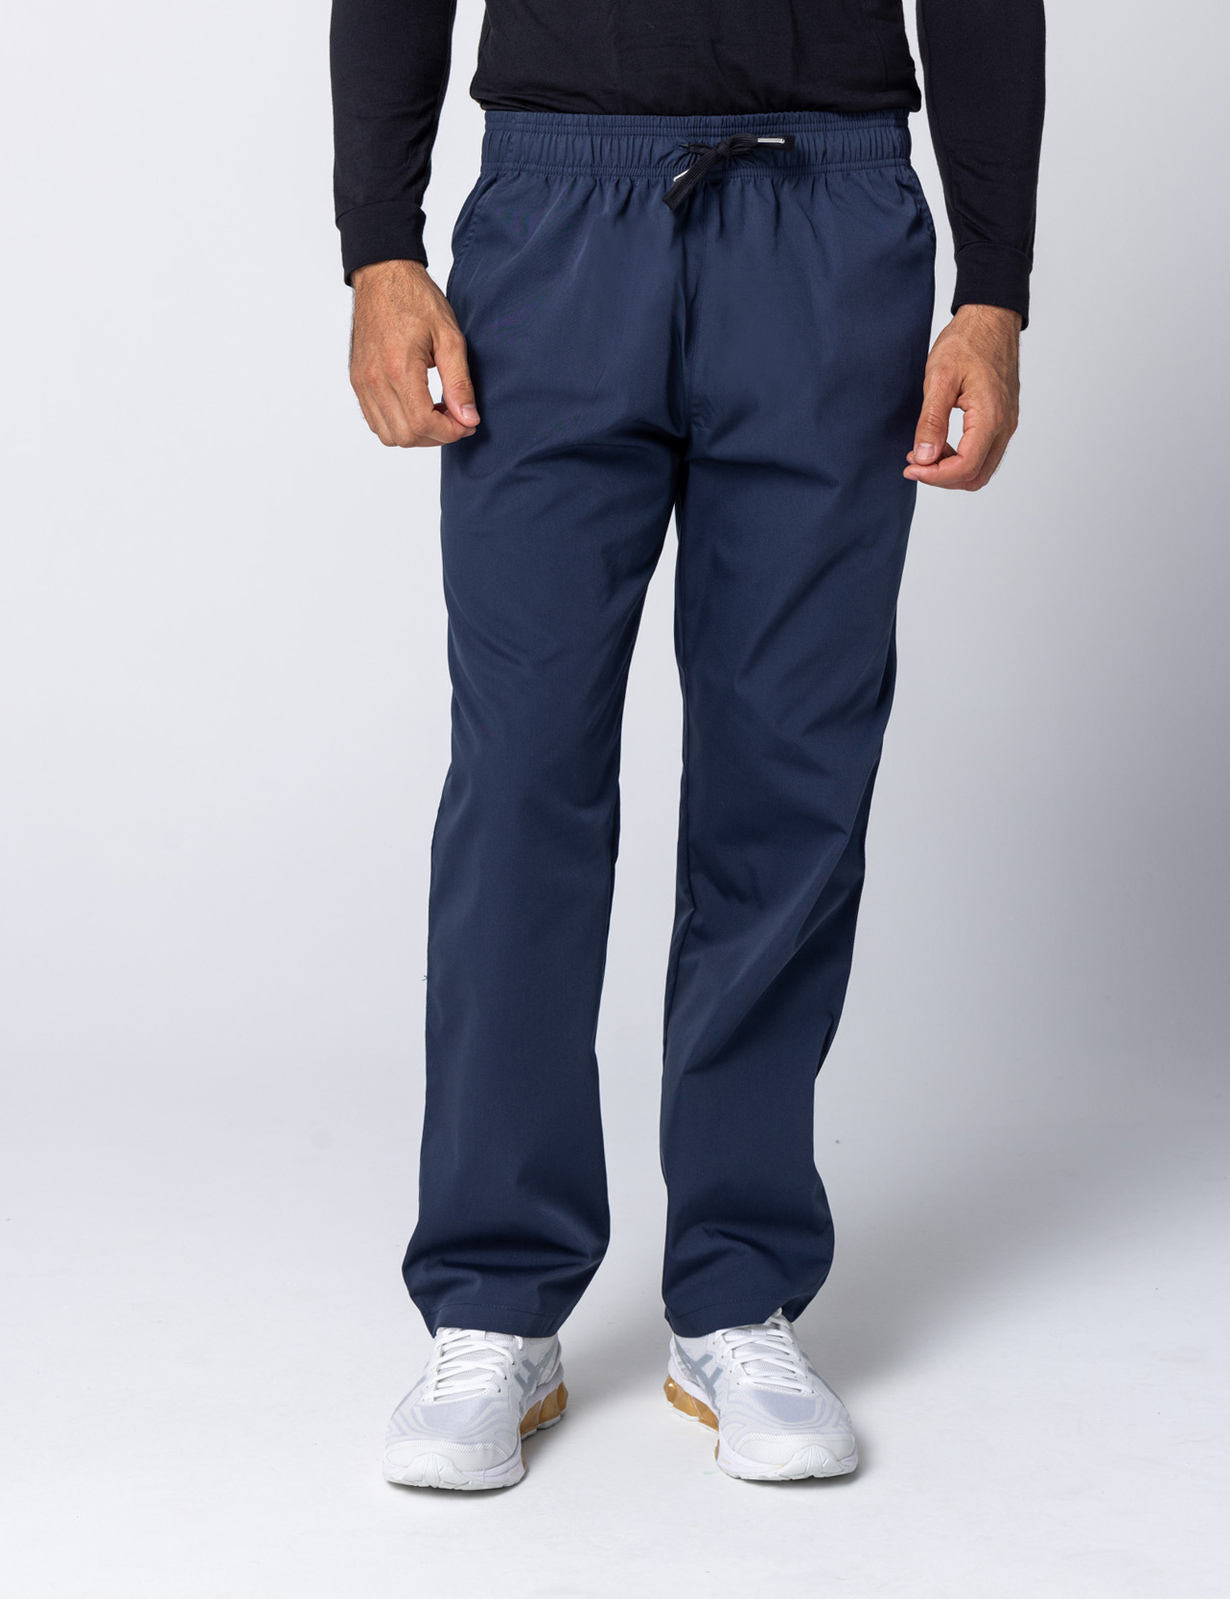 Men's Regular Cut Pants - Navy - 2X Large